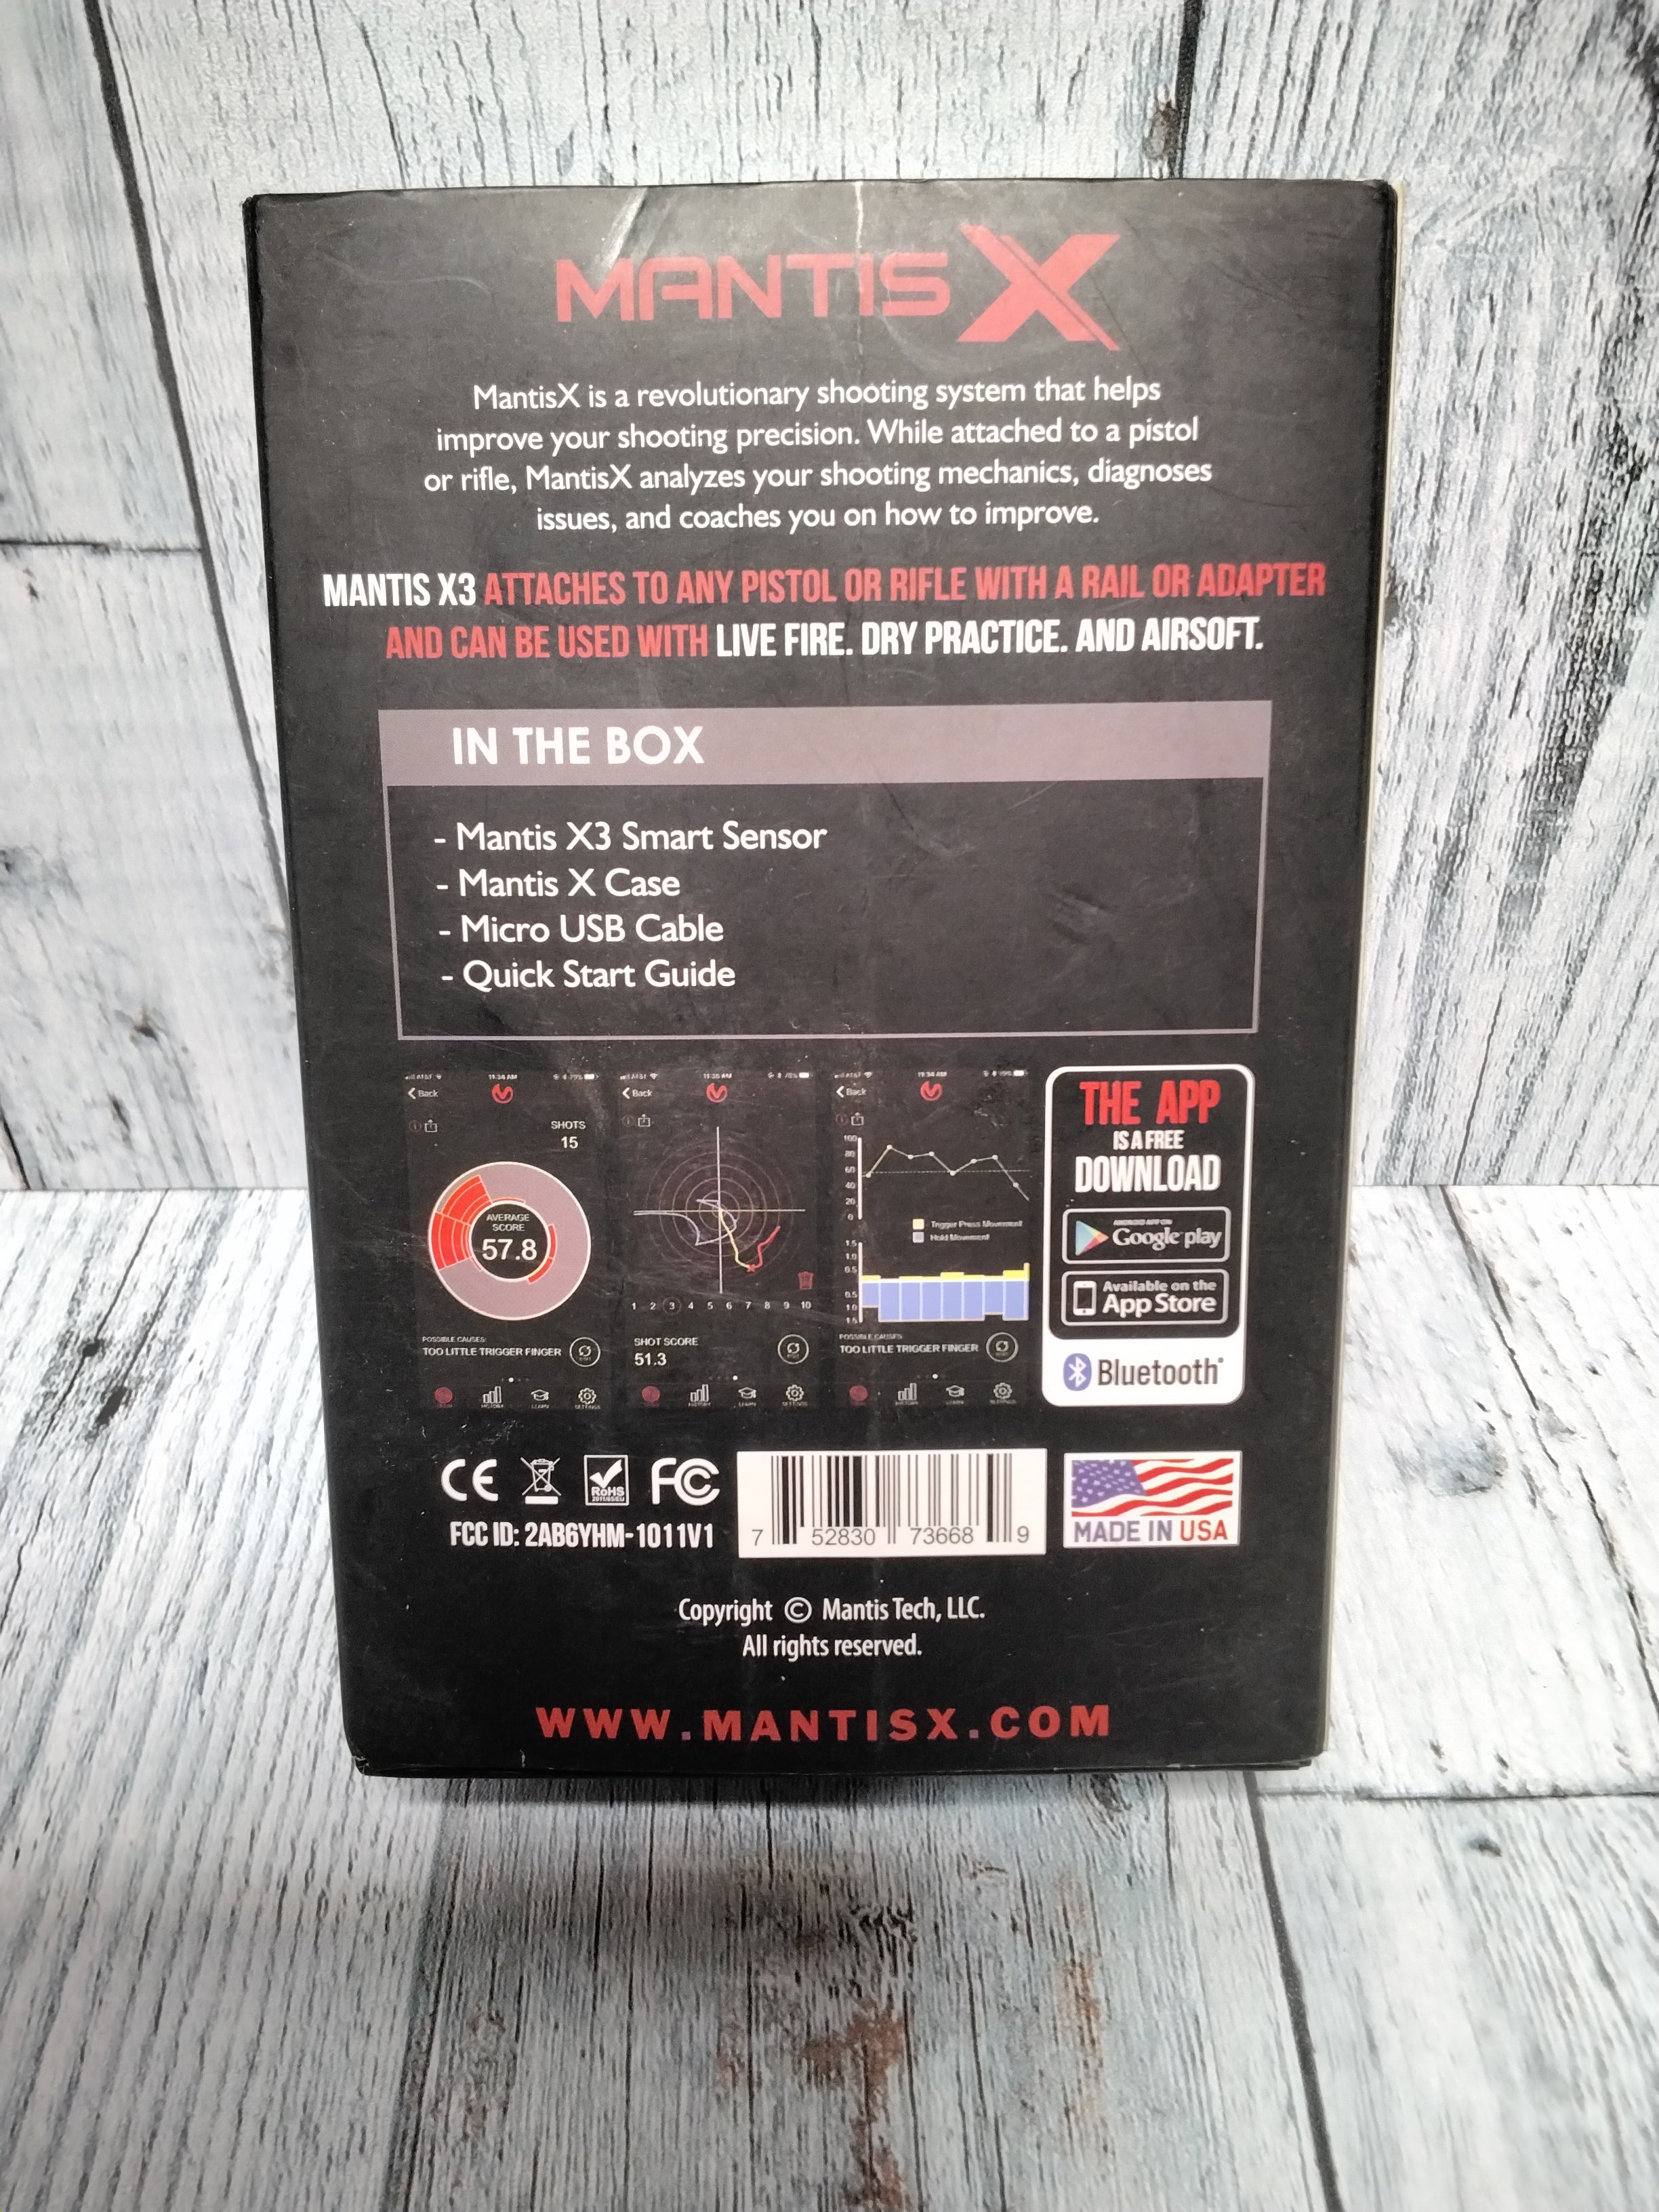 Mantis X3 Shooting Performance System, Real-time Tracking, Analysis, Diagnostics (7775961186542)